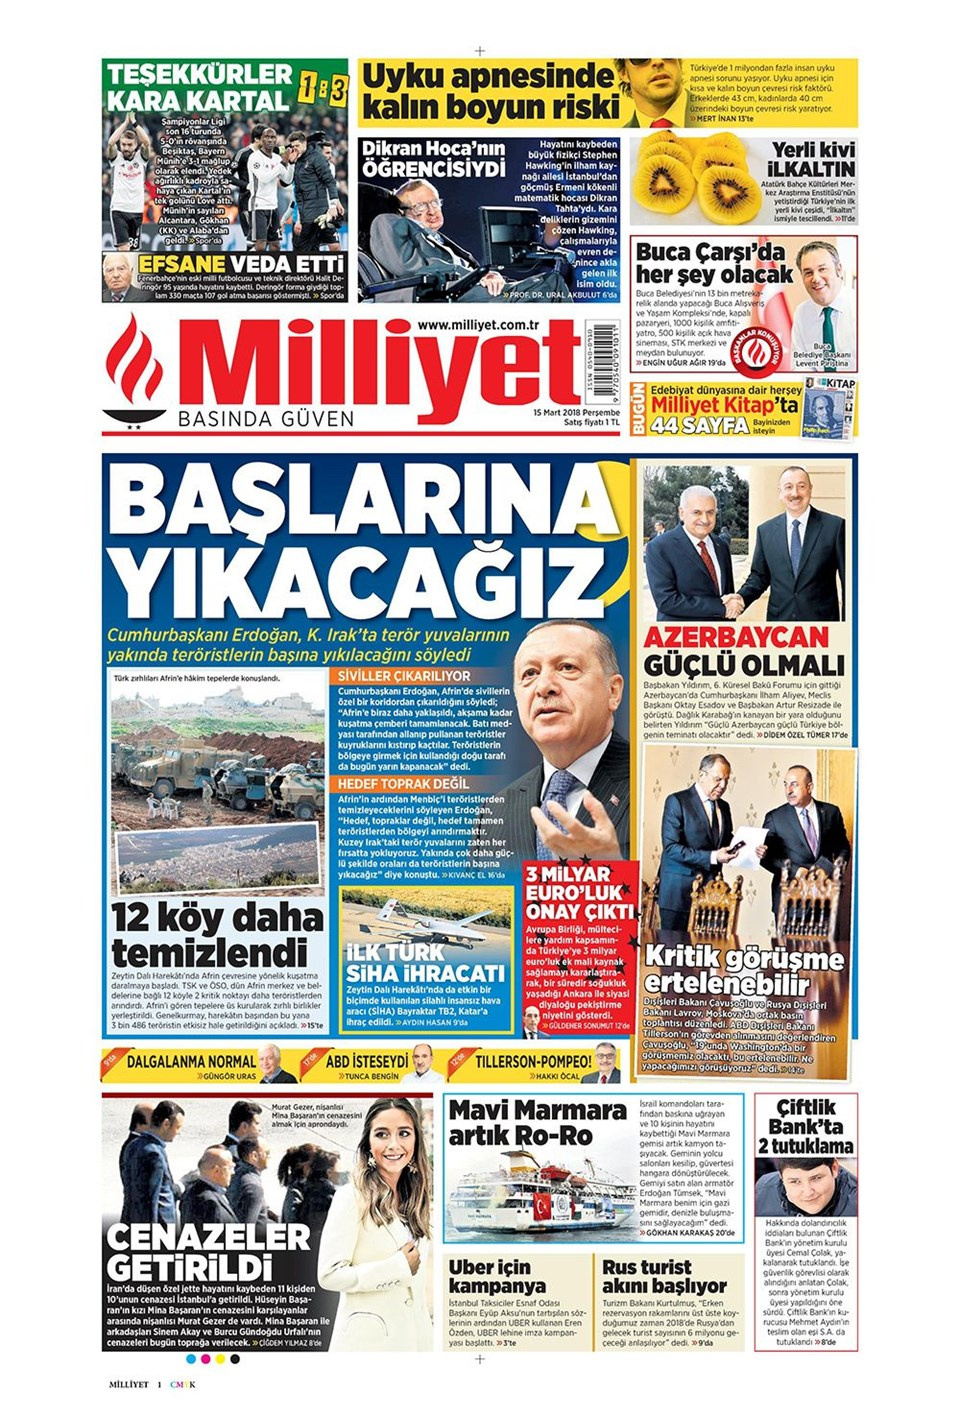 Gazete manşetleri 15 Mart 2018 Hürriyet - Sözcü - Posta